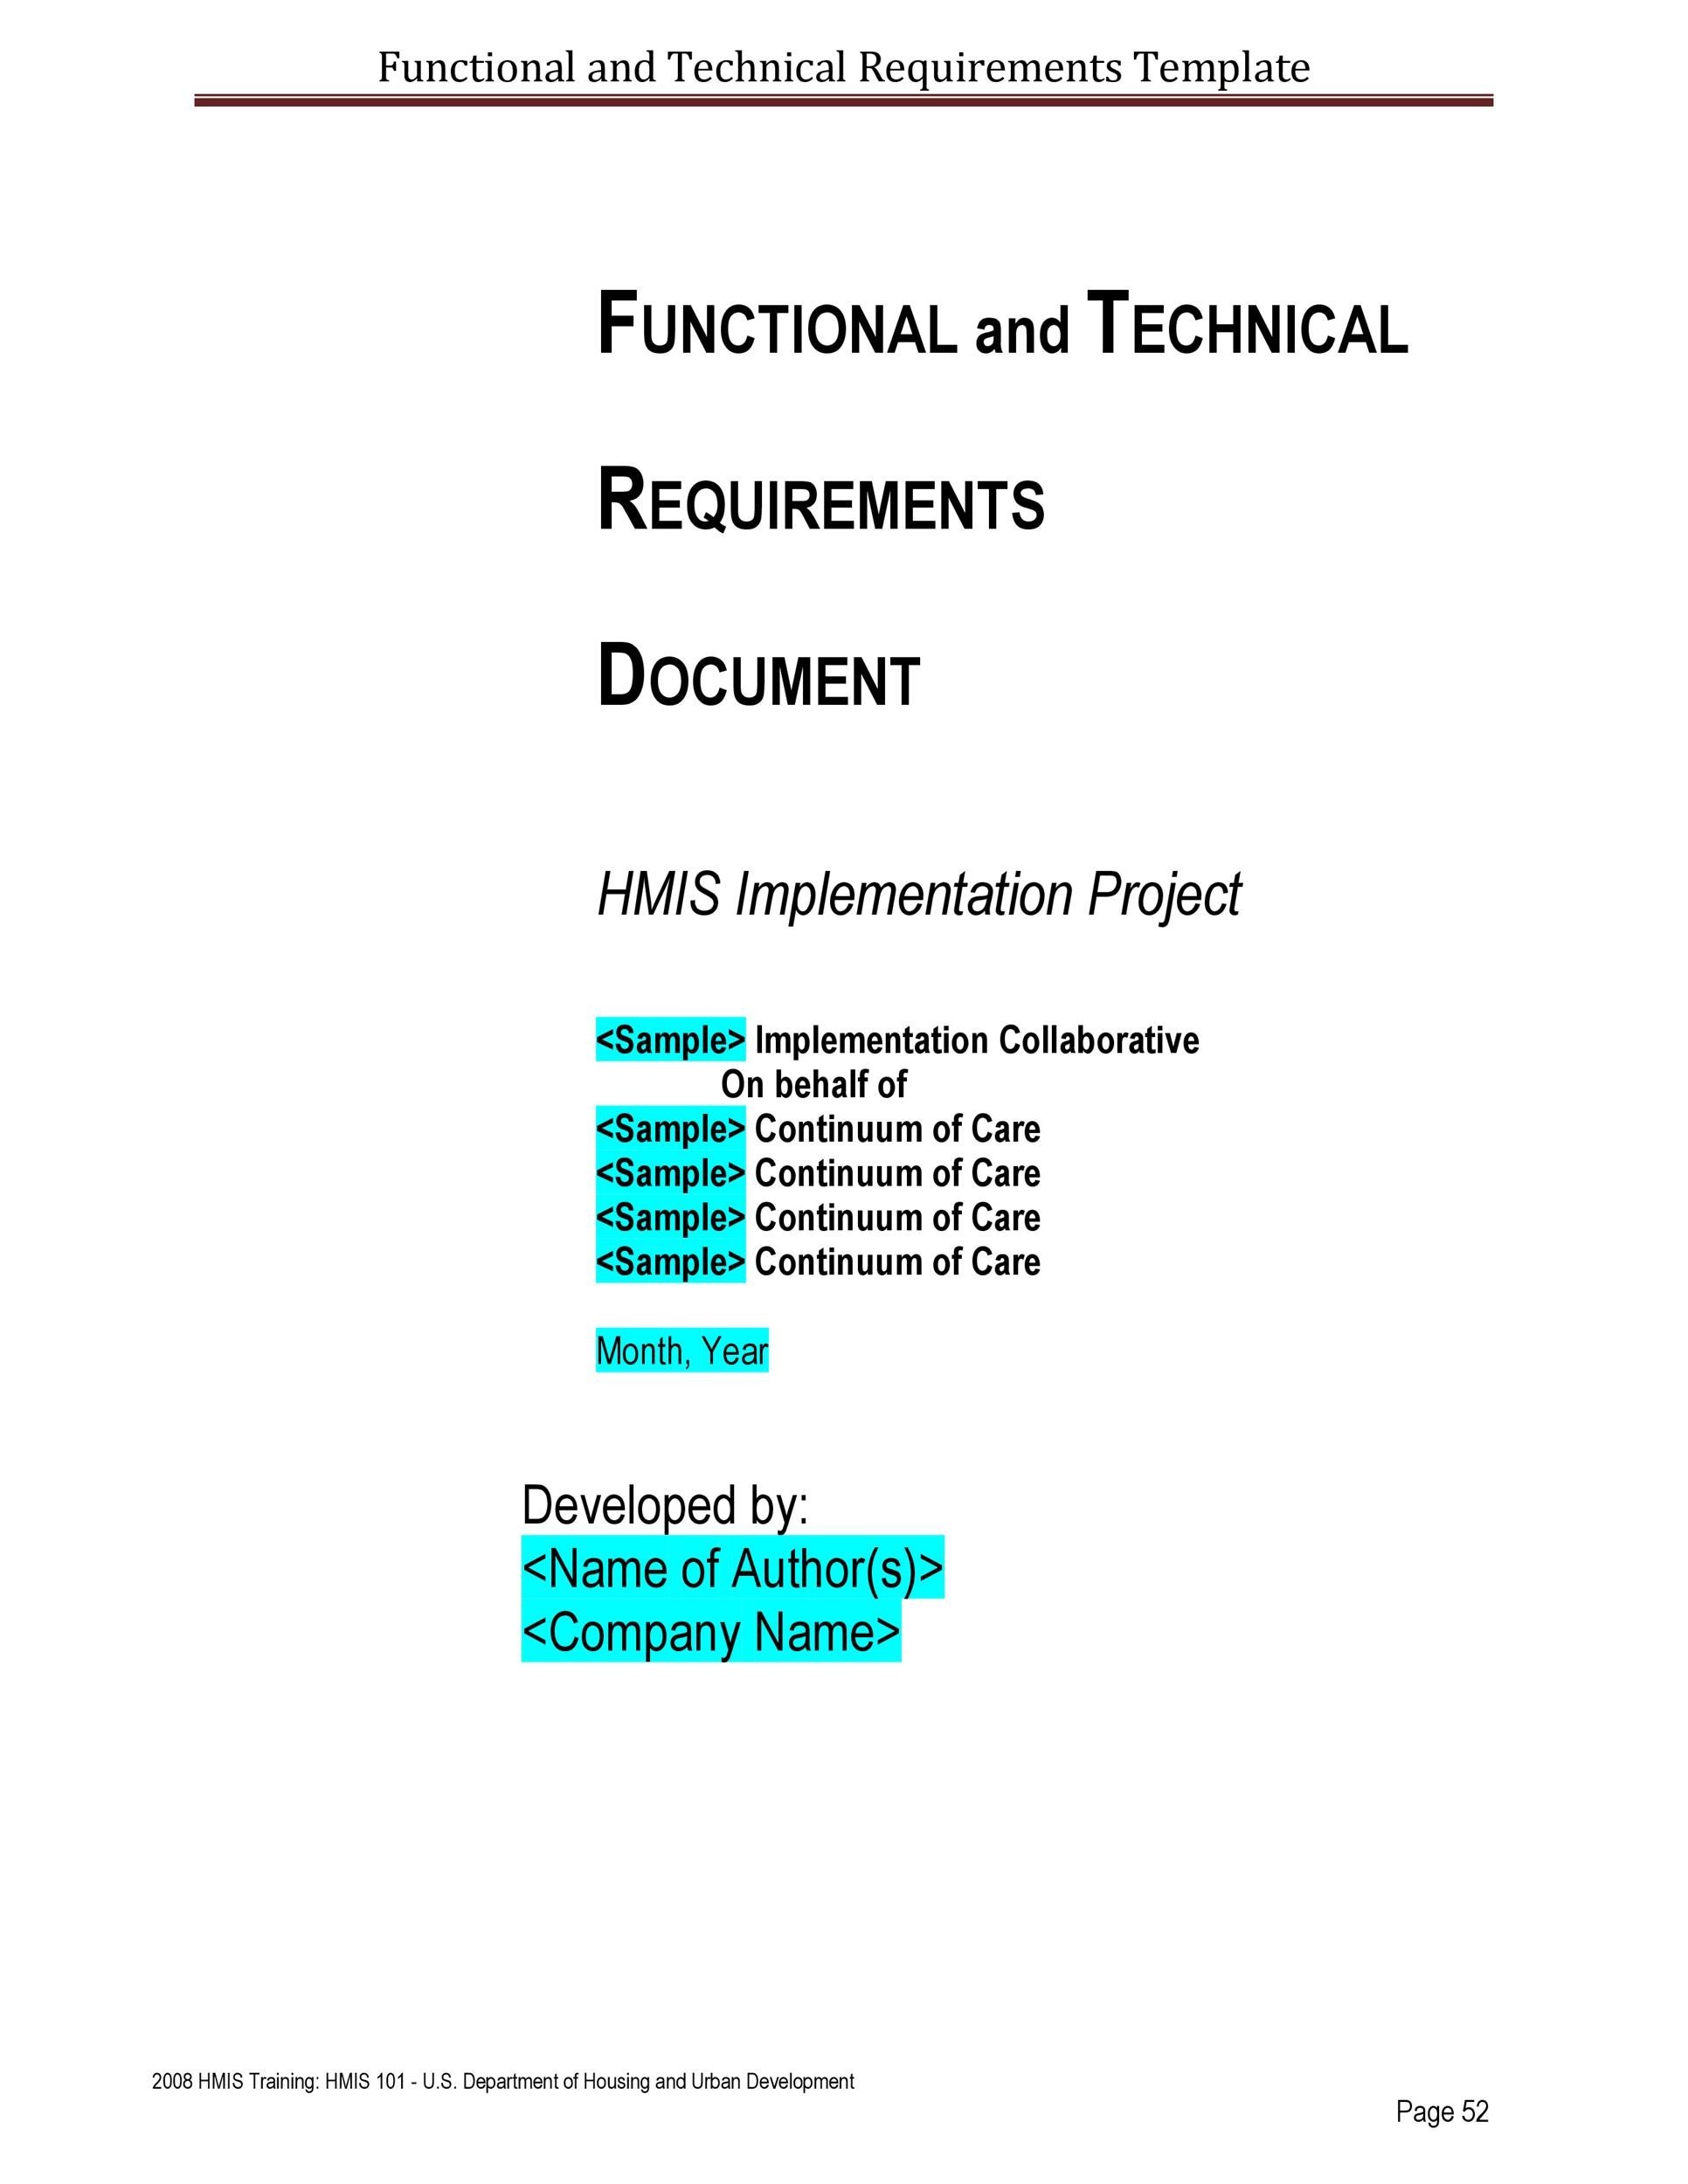 Project management requirements document template – celestialmedia. Co.